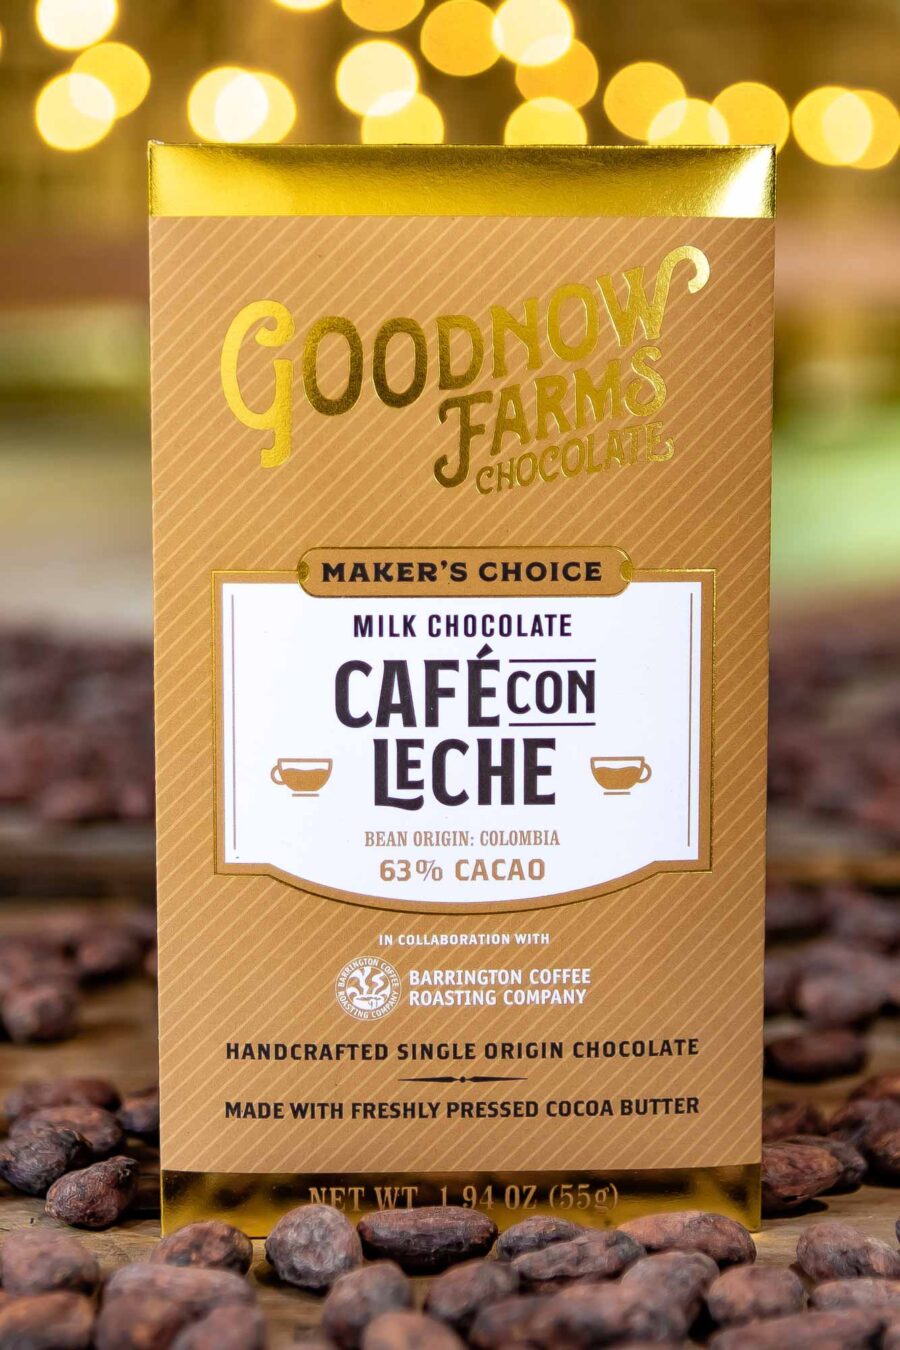 Goodnow Farms Maker's Choice Colombia 63% Dark-Milk Chocolate Bar with Café con Leche